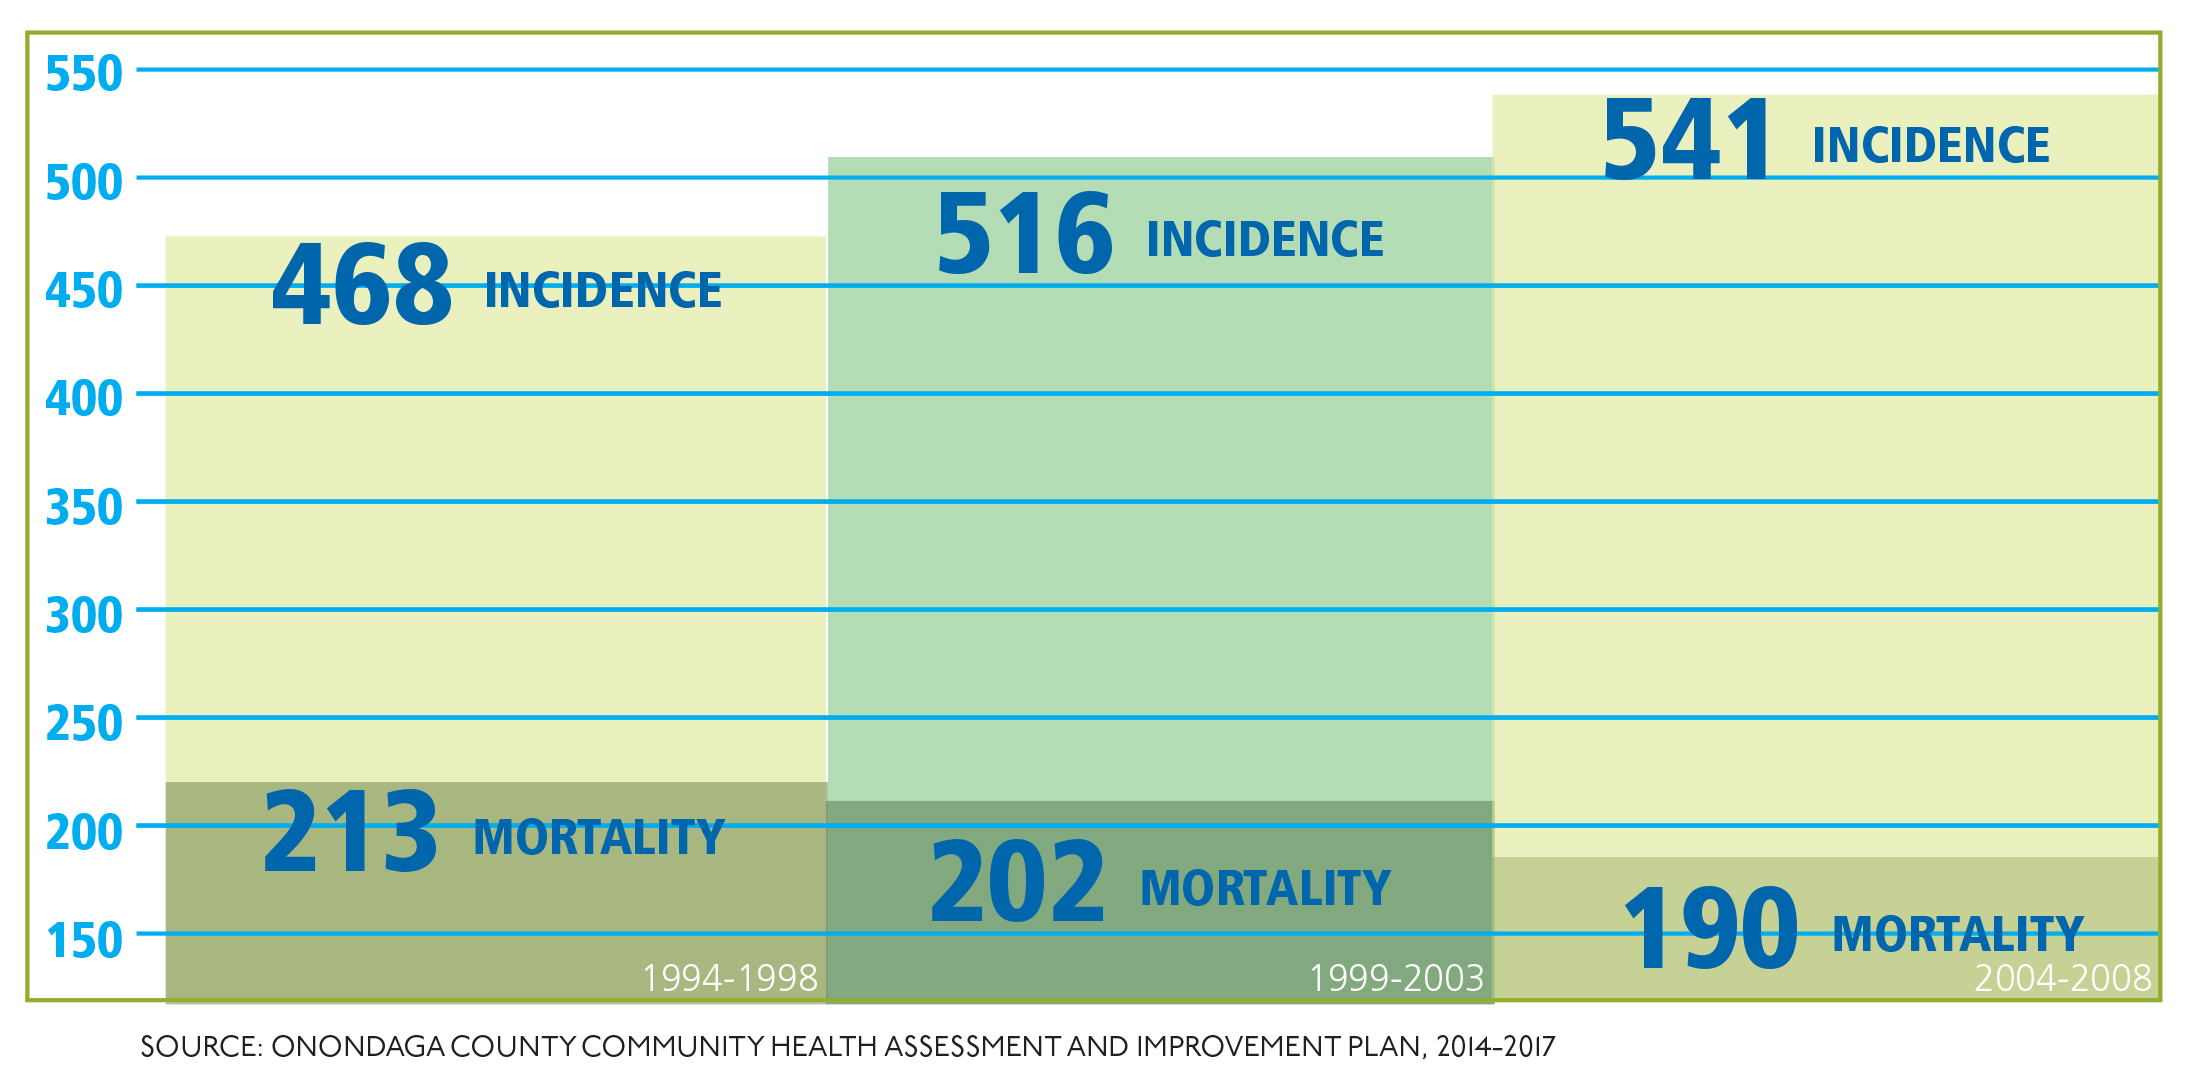 SOURCE: ONONDAGA COUNTY COMMUNITY HEALTH ASSESSMENT AND IMPROVEMENT PLAN, 2014-2017